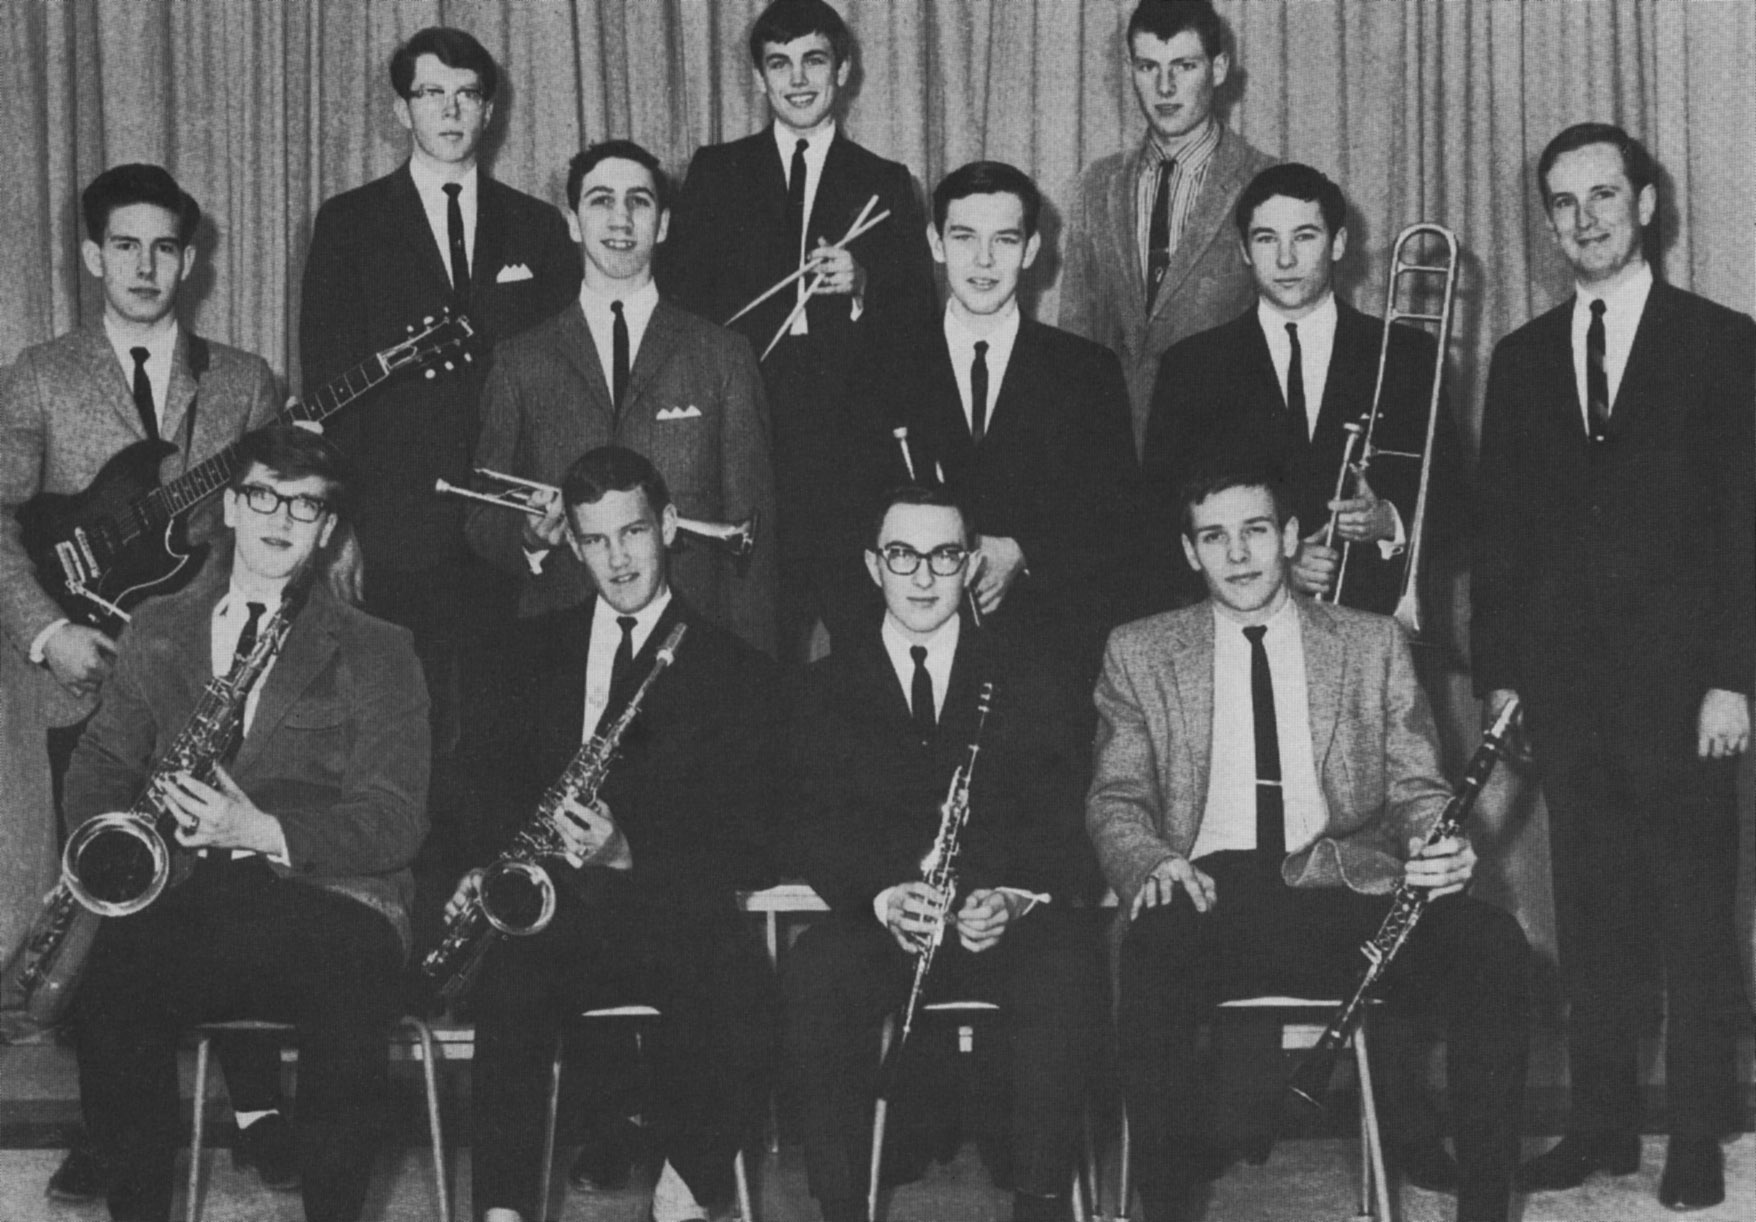 (Click to magnify) FIRST ROW: Sandy Taylor, Saxophone; Ken Rattray, Saxophone; D. McCaslin, Clarinet; Gord Whitney, Clarinet; SECOND ROW: G. Howroyd, Guitar; Derek Belfry, Trumpet; Jim Duncan, Trumpet; Dave Taylor, Trombone; J. Allison; THIRD ROW: Walter 